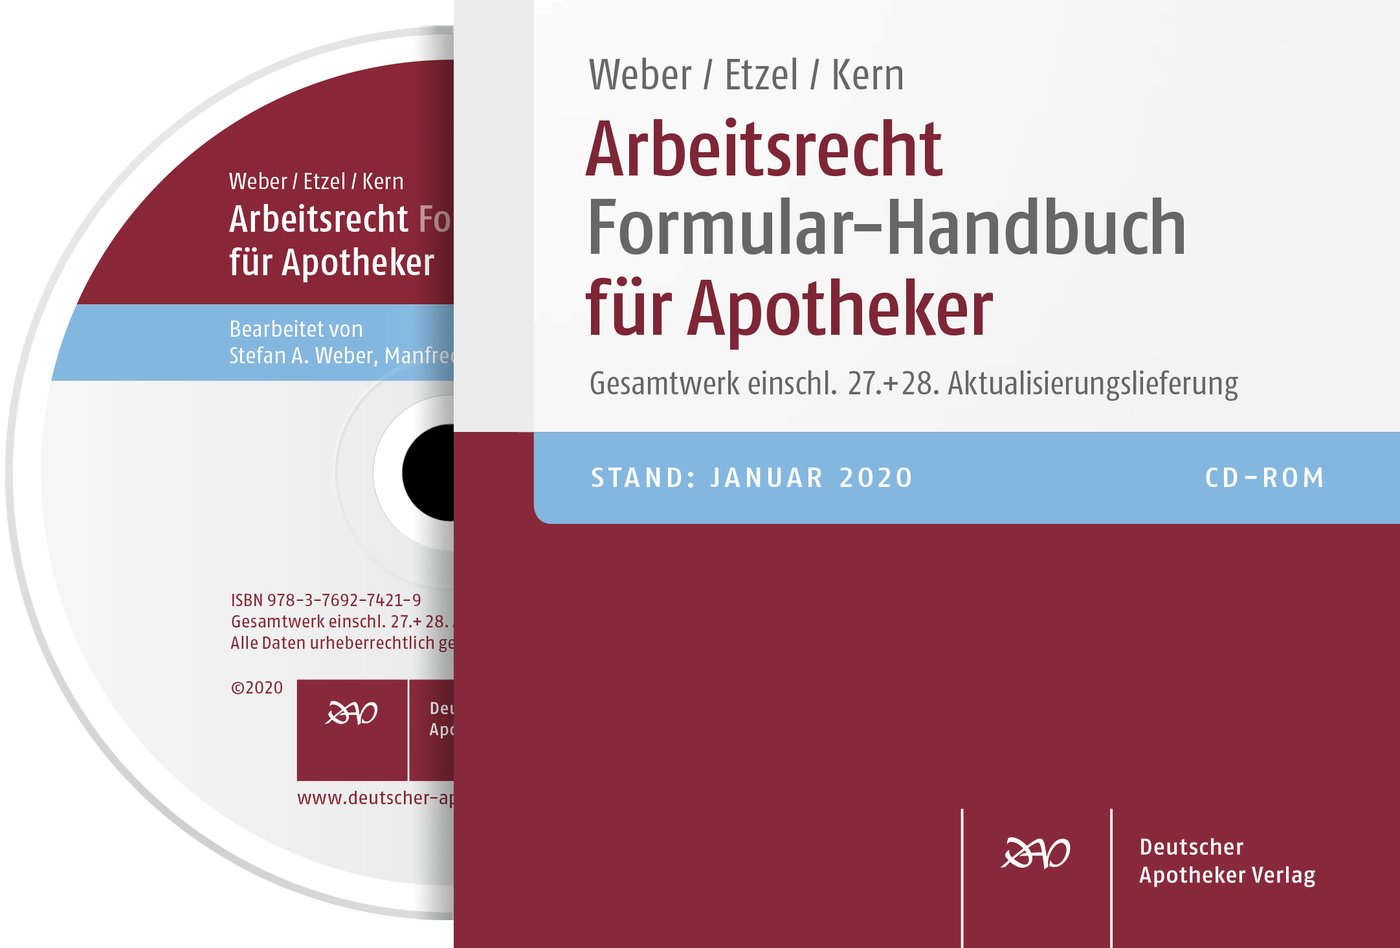 Arbeitsrecht Shop Deutscher Apotheker Verlag